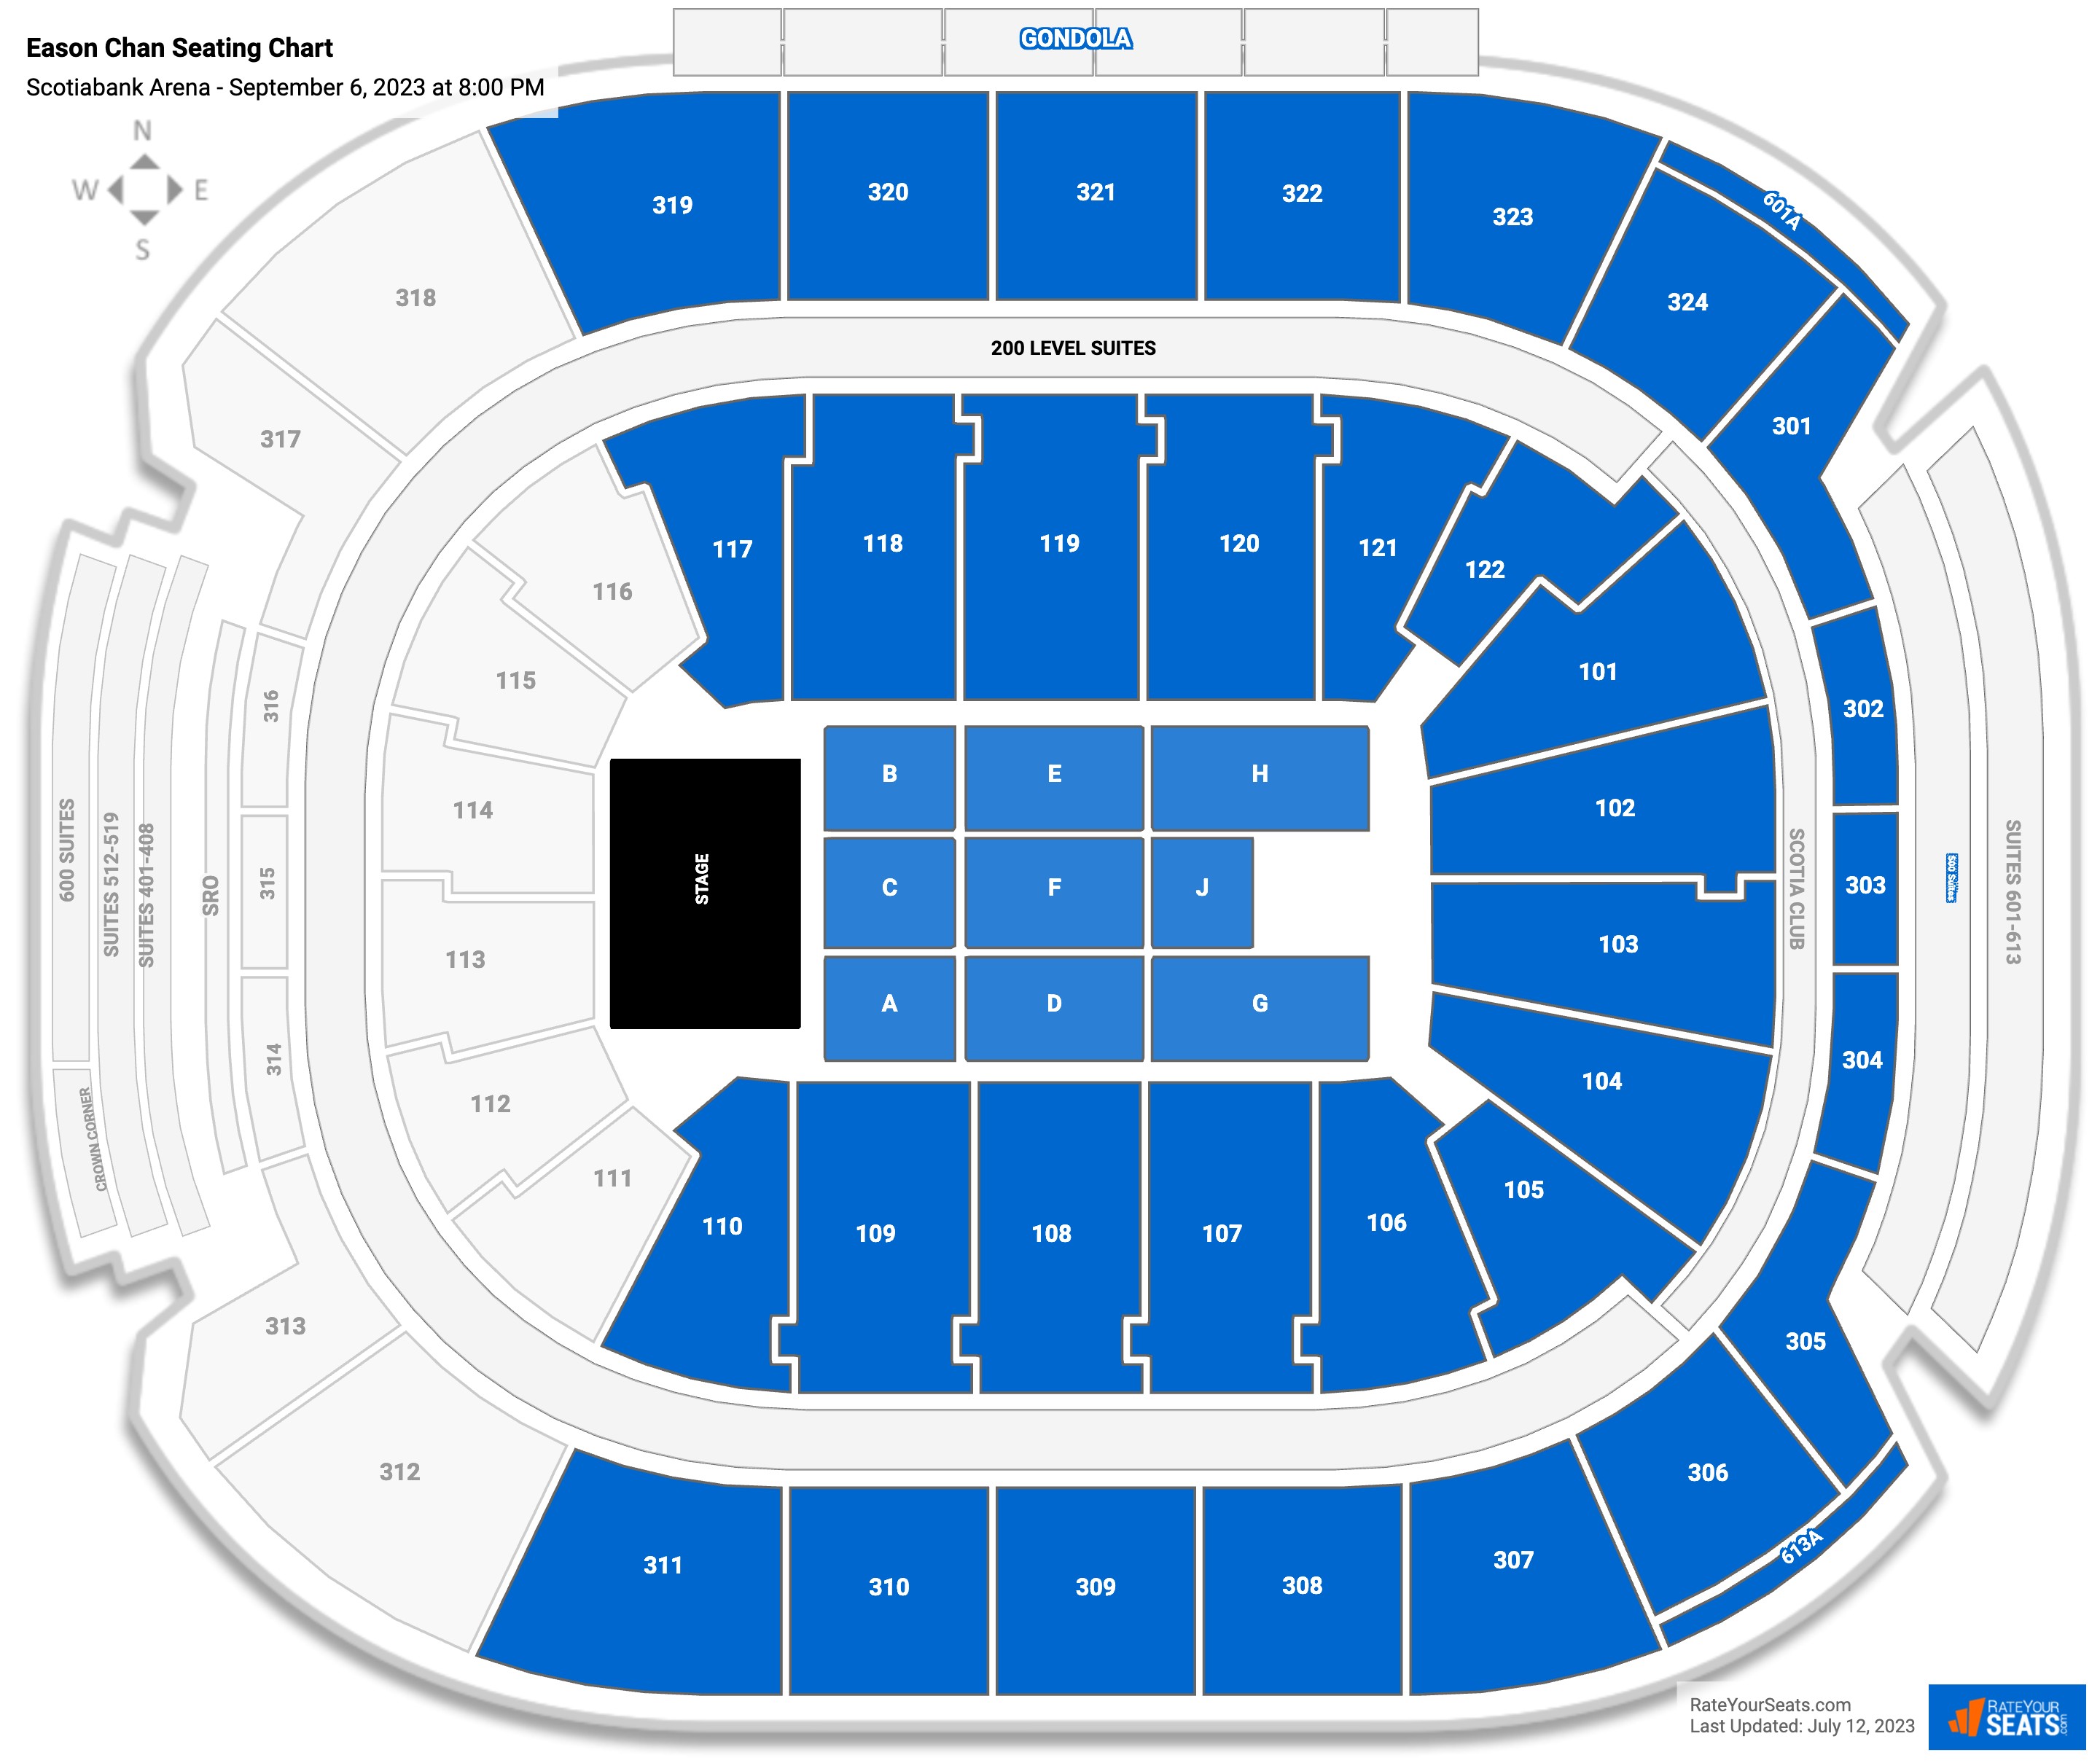 Scotiabank Arena Concert Seating Chart - RateYourSeats.com